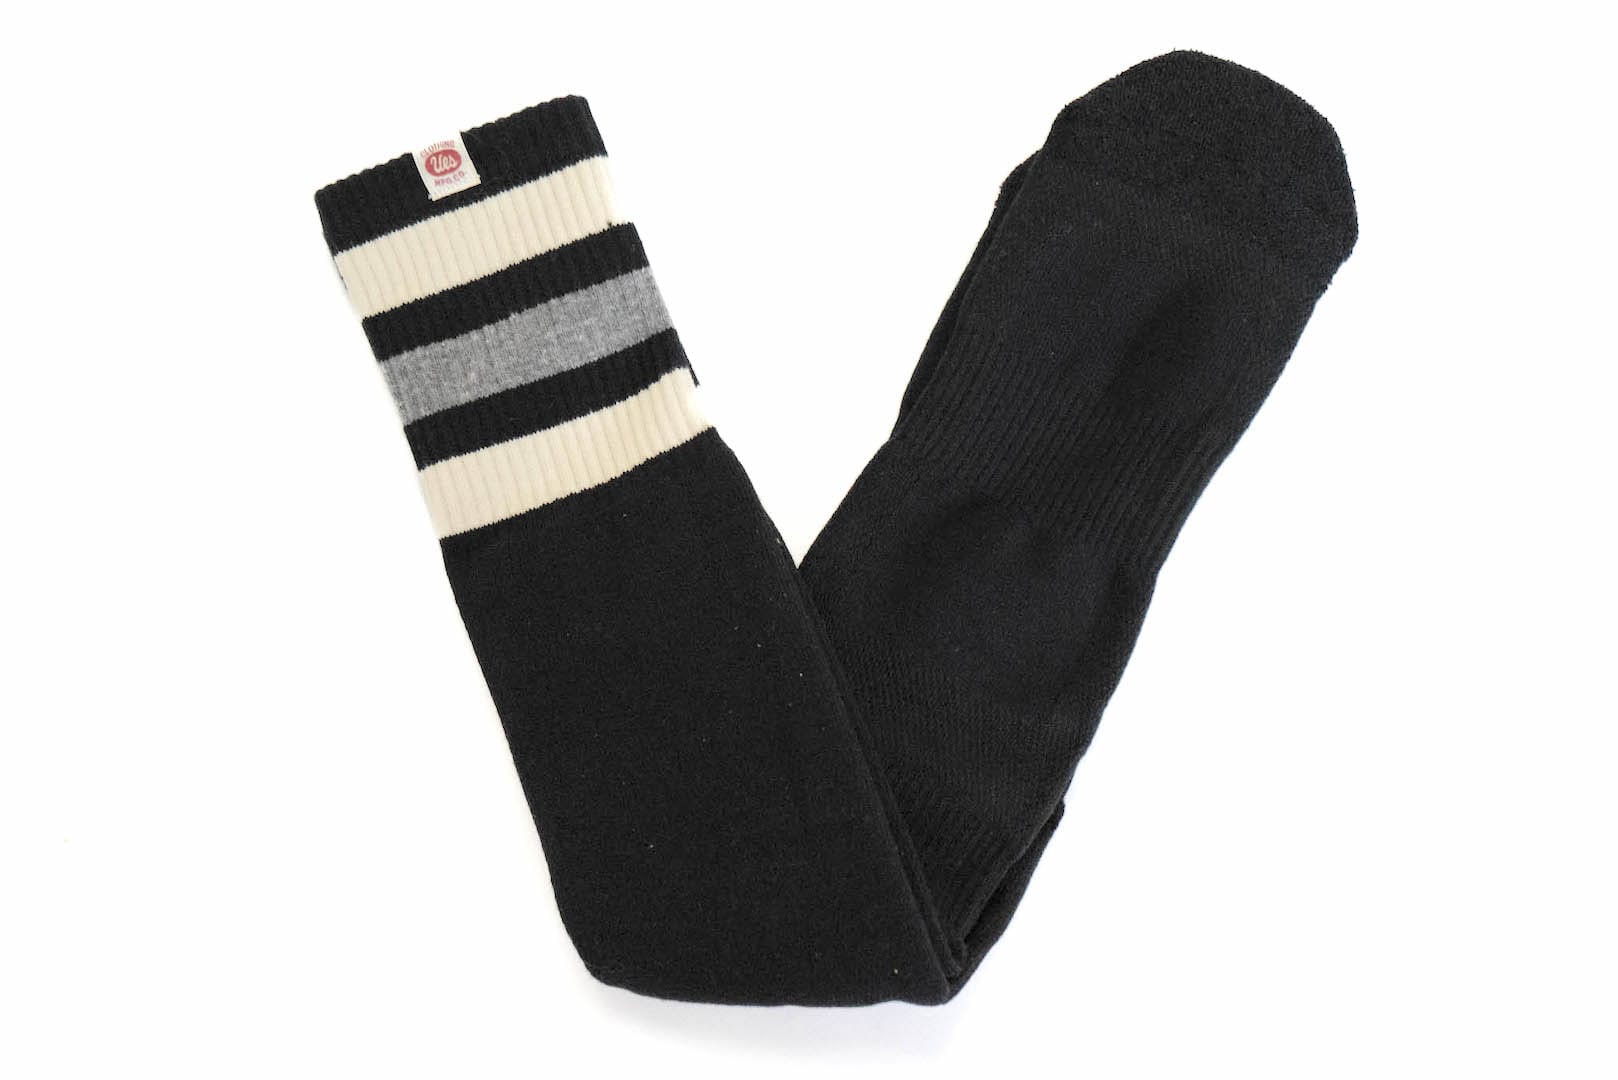 UES 'Ultimate' Boot socks